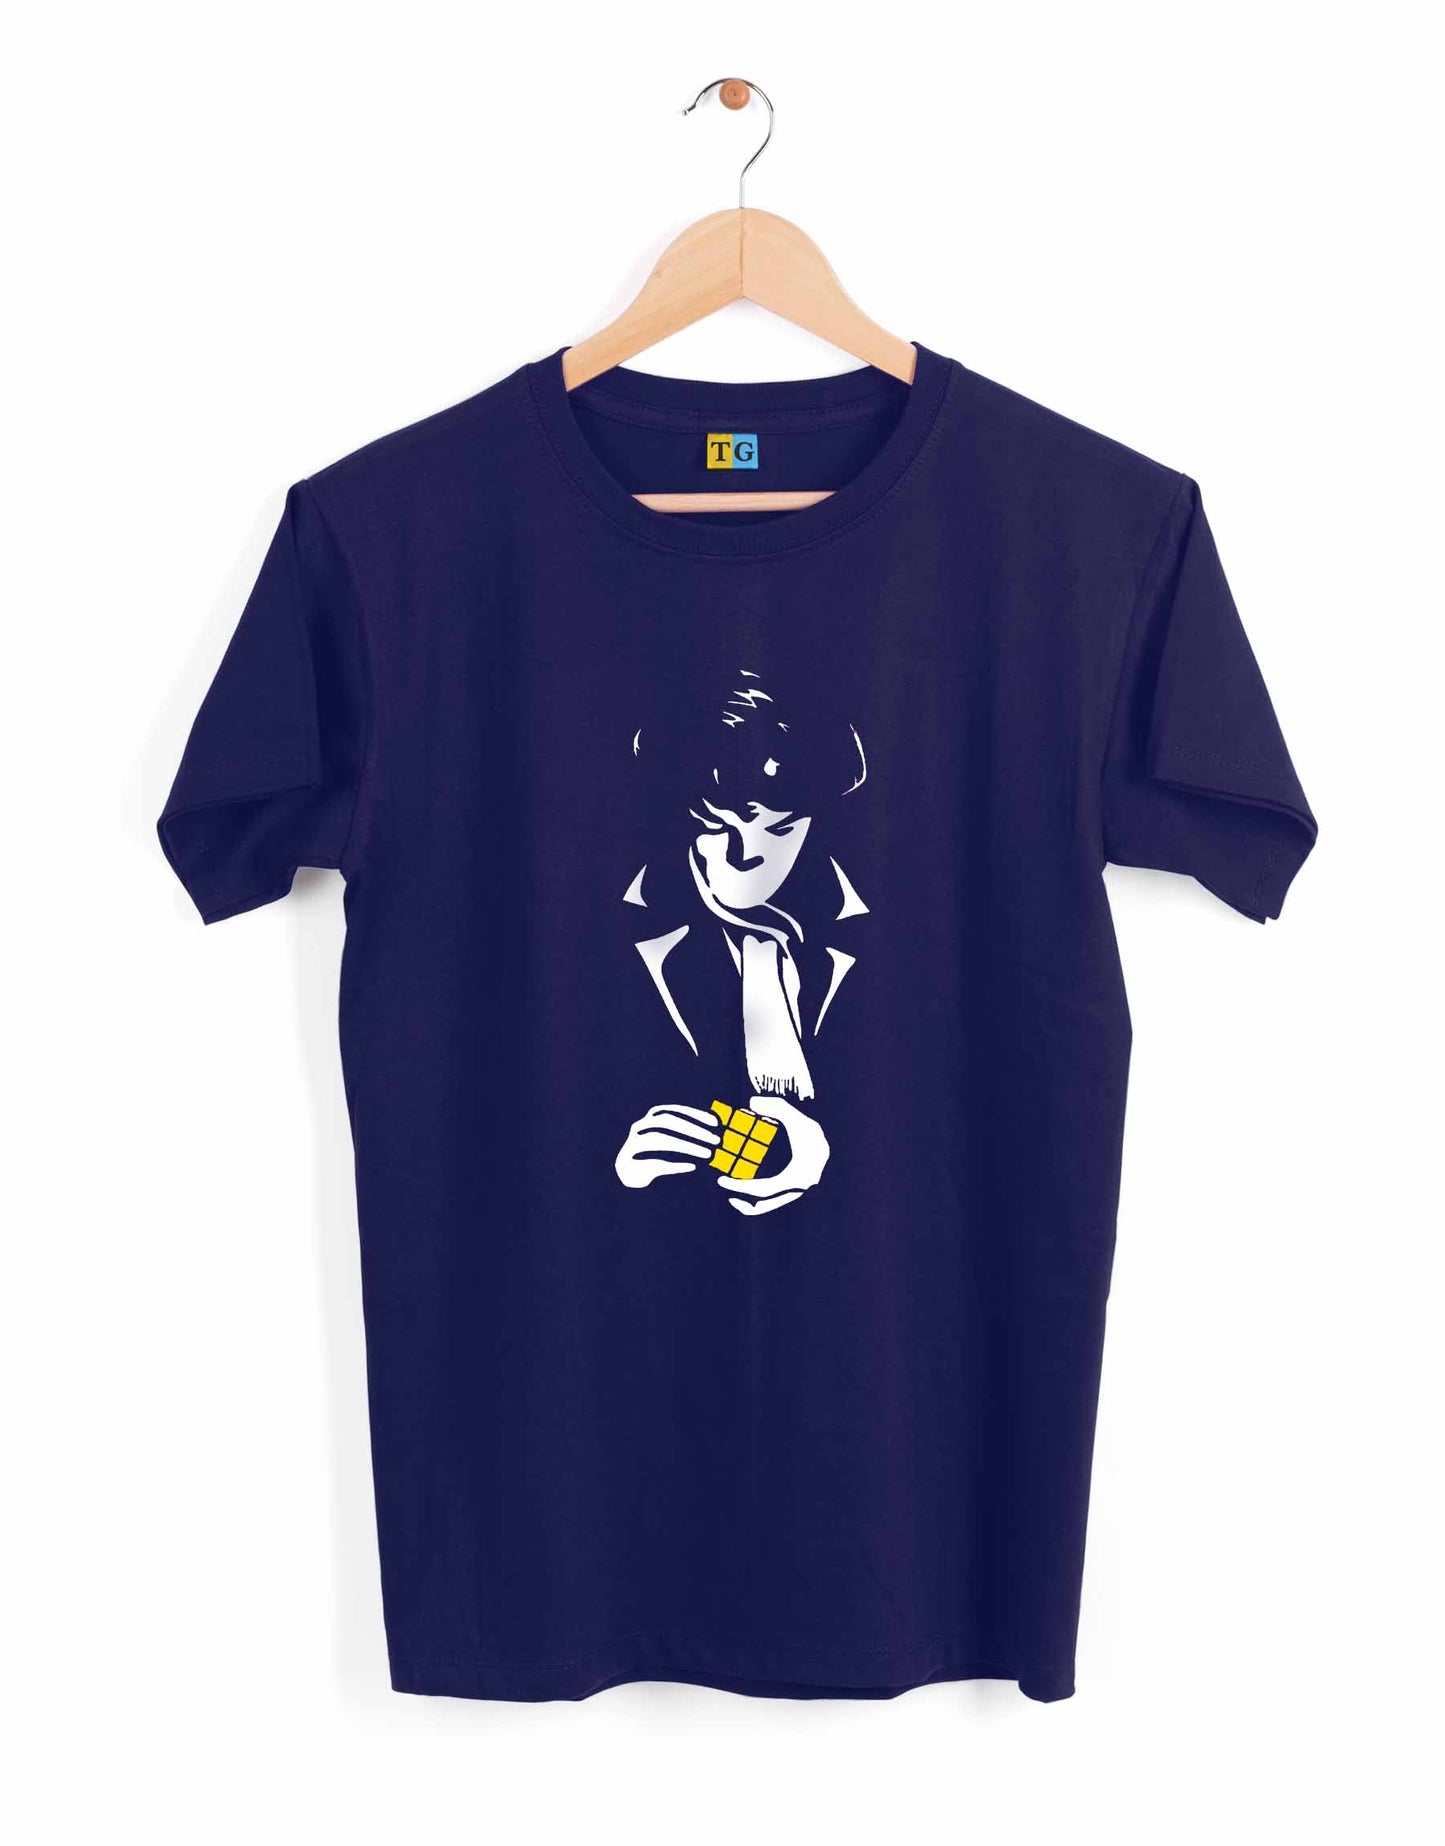 Sherlock Stylish T-Shirt - 100% Cotton | TEEGURUJI - 499.00 - TEEGURUJI - Free Shipping